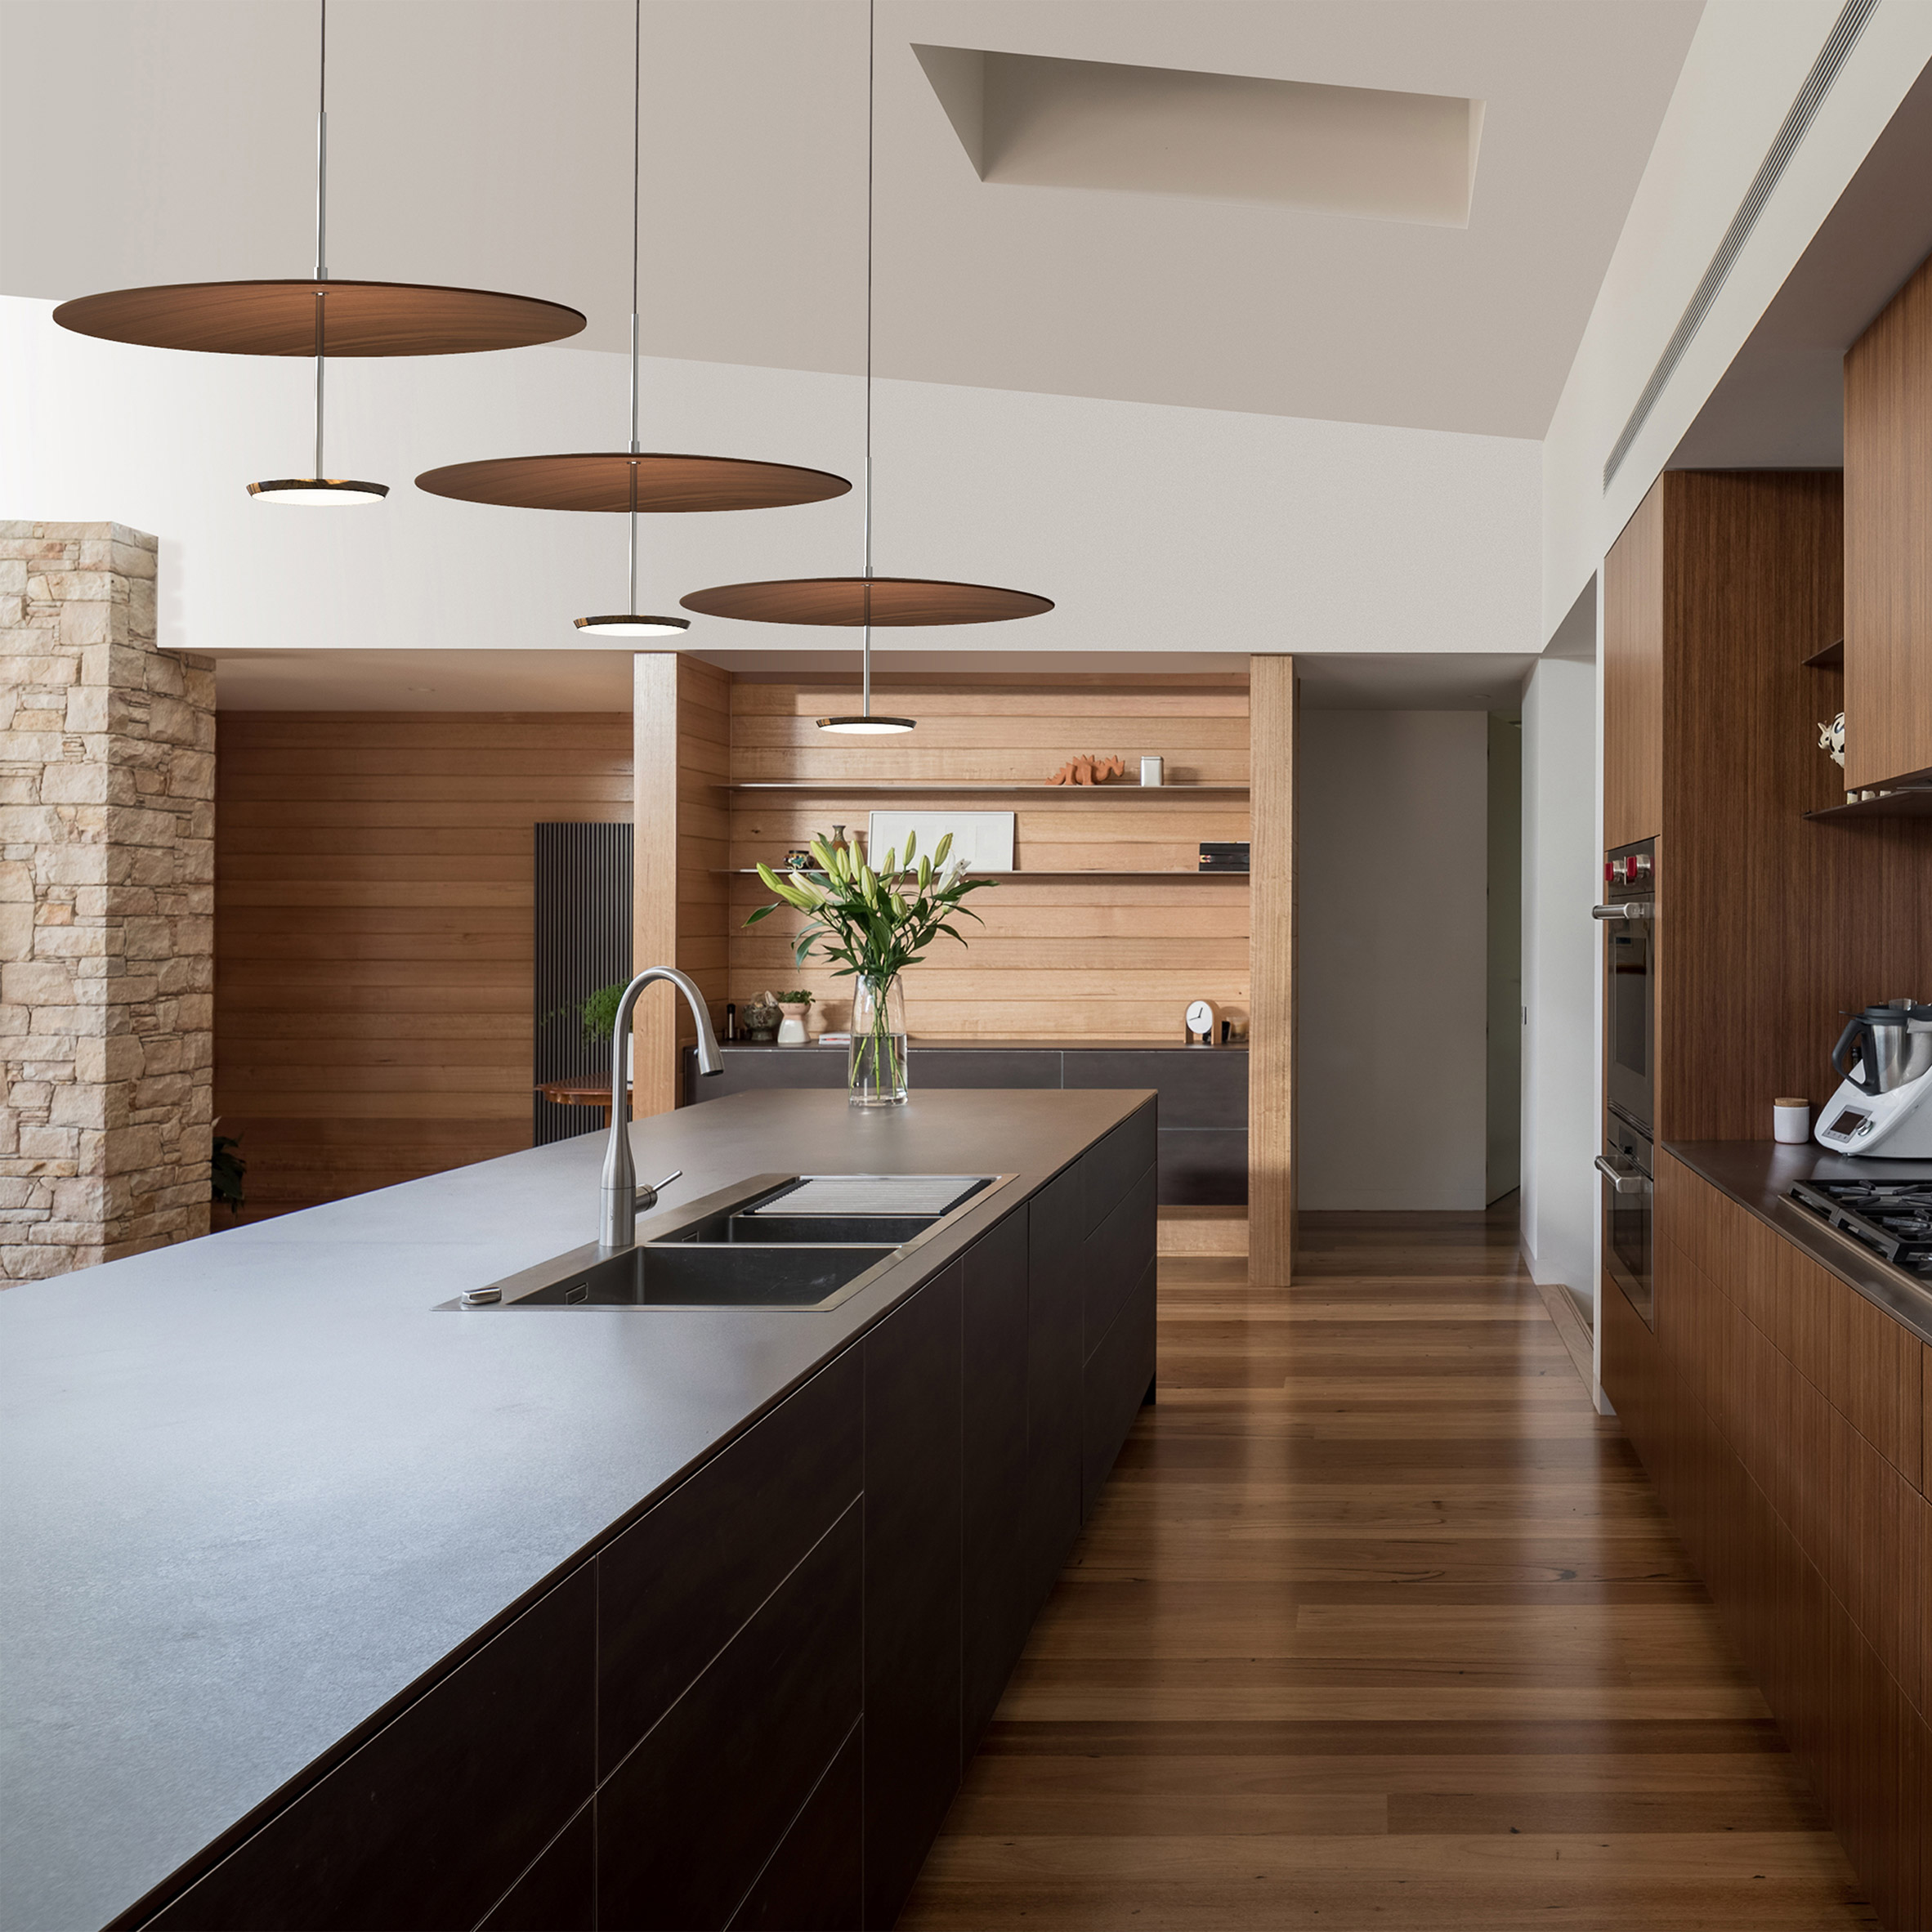 Pablo Design's Sky Dome pendant lights suspended in a contemporary kitchen interior